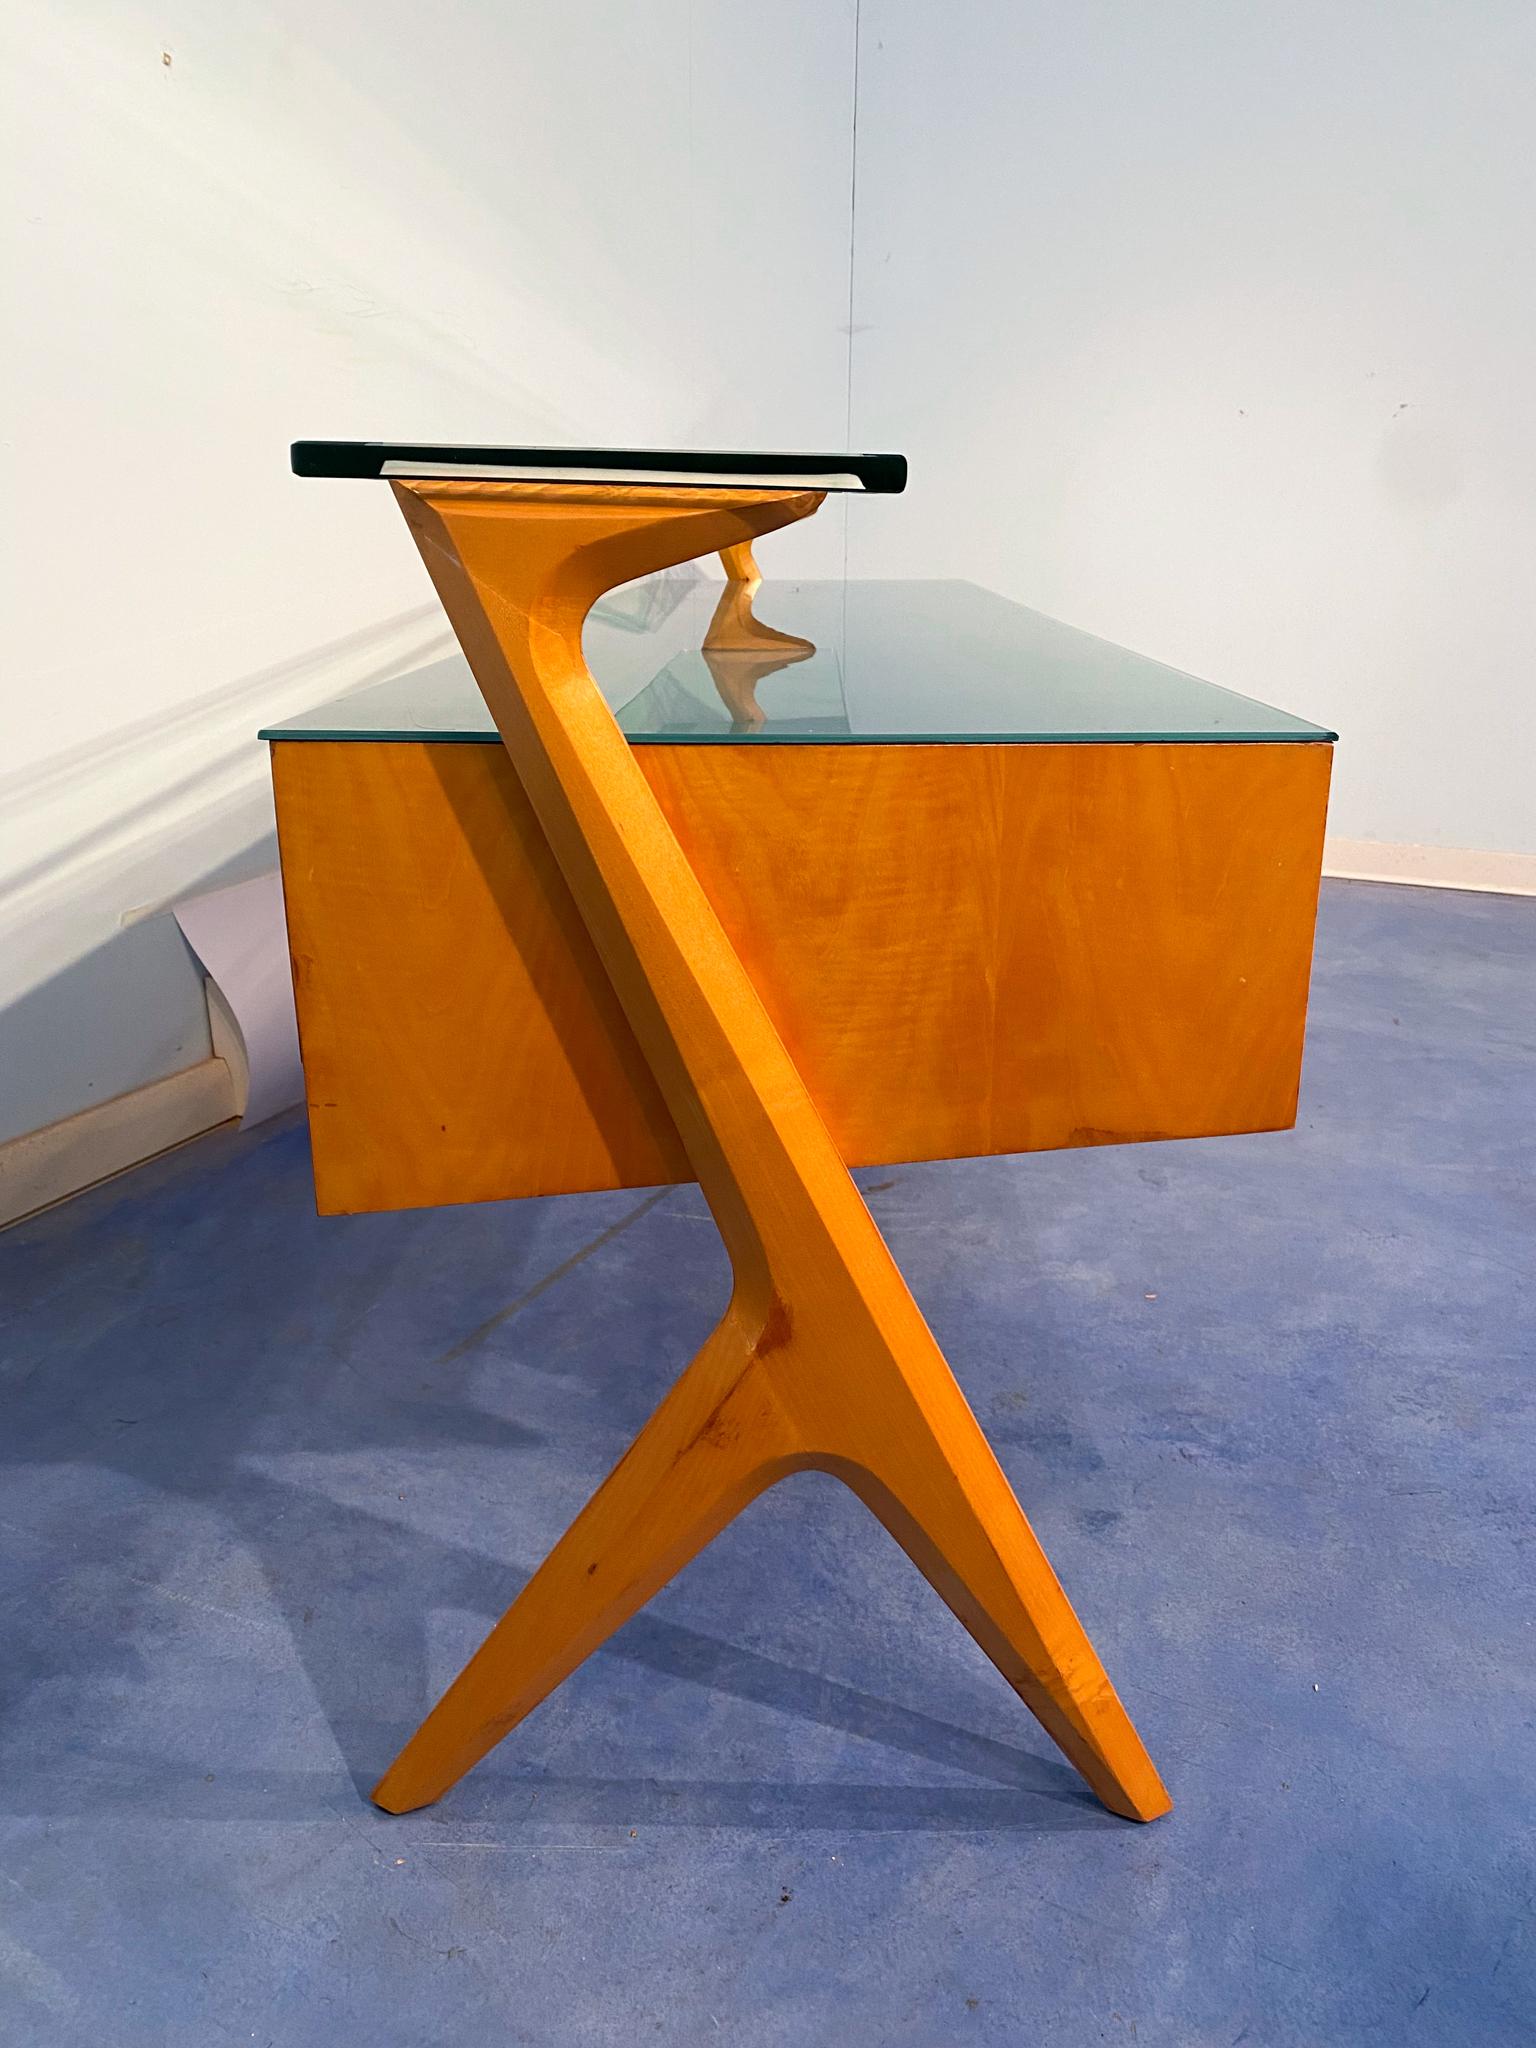 Italian Mid-Century Sideboard or Vanity Dresser by Vittorio Dassi 1950s For Sale 10